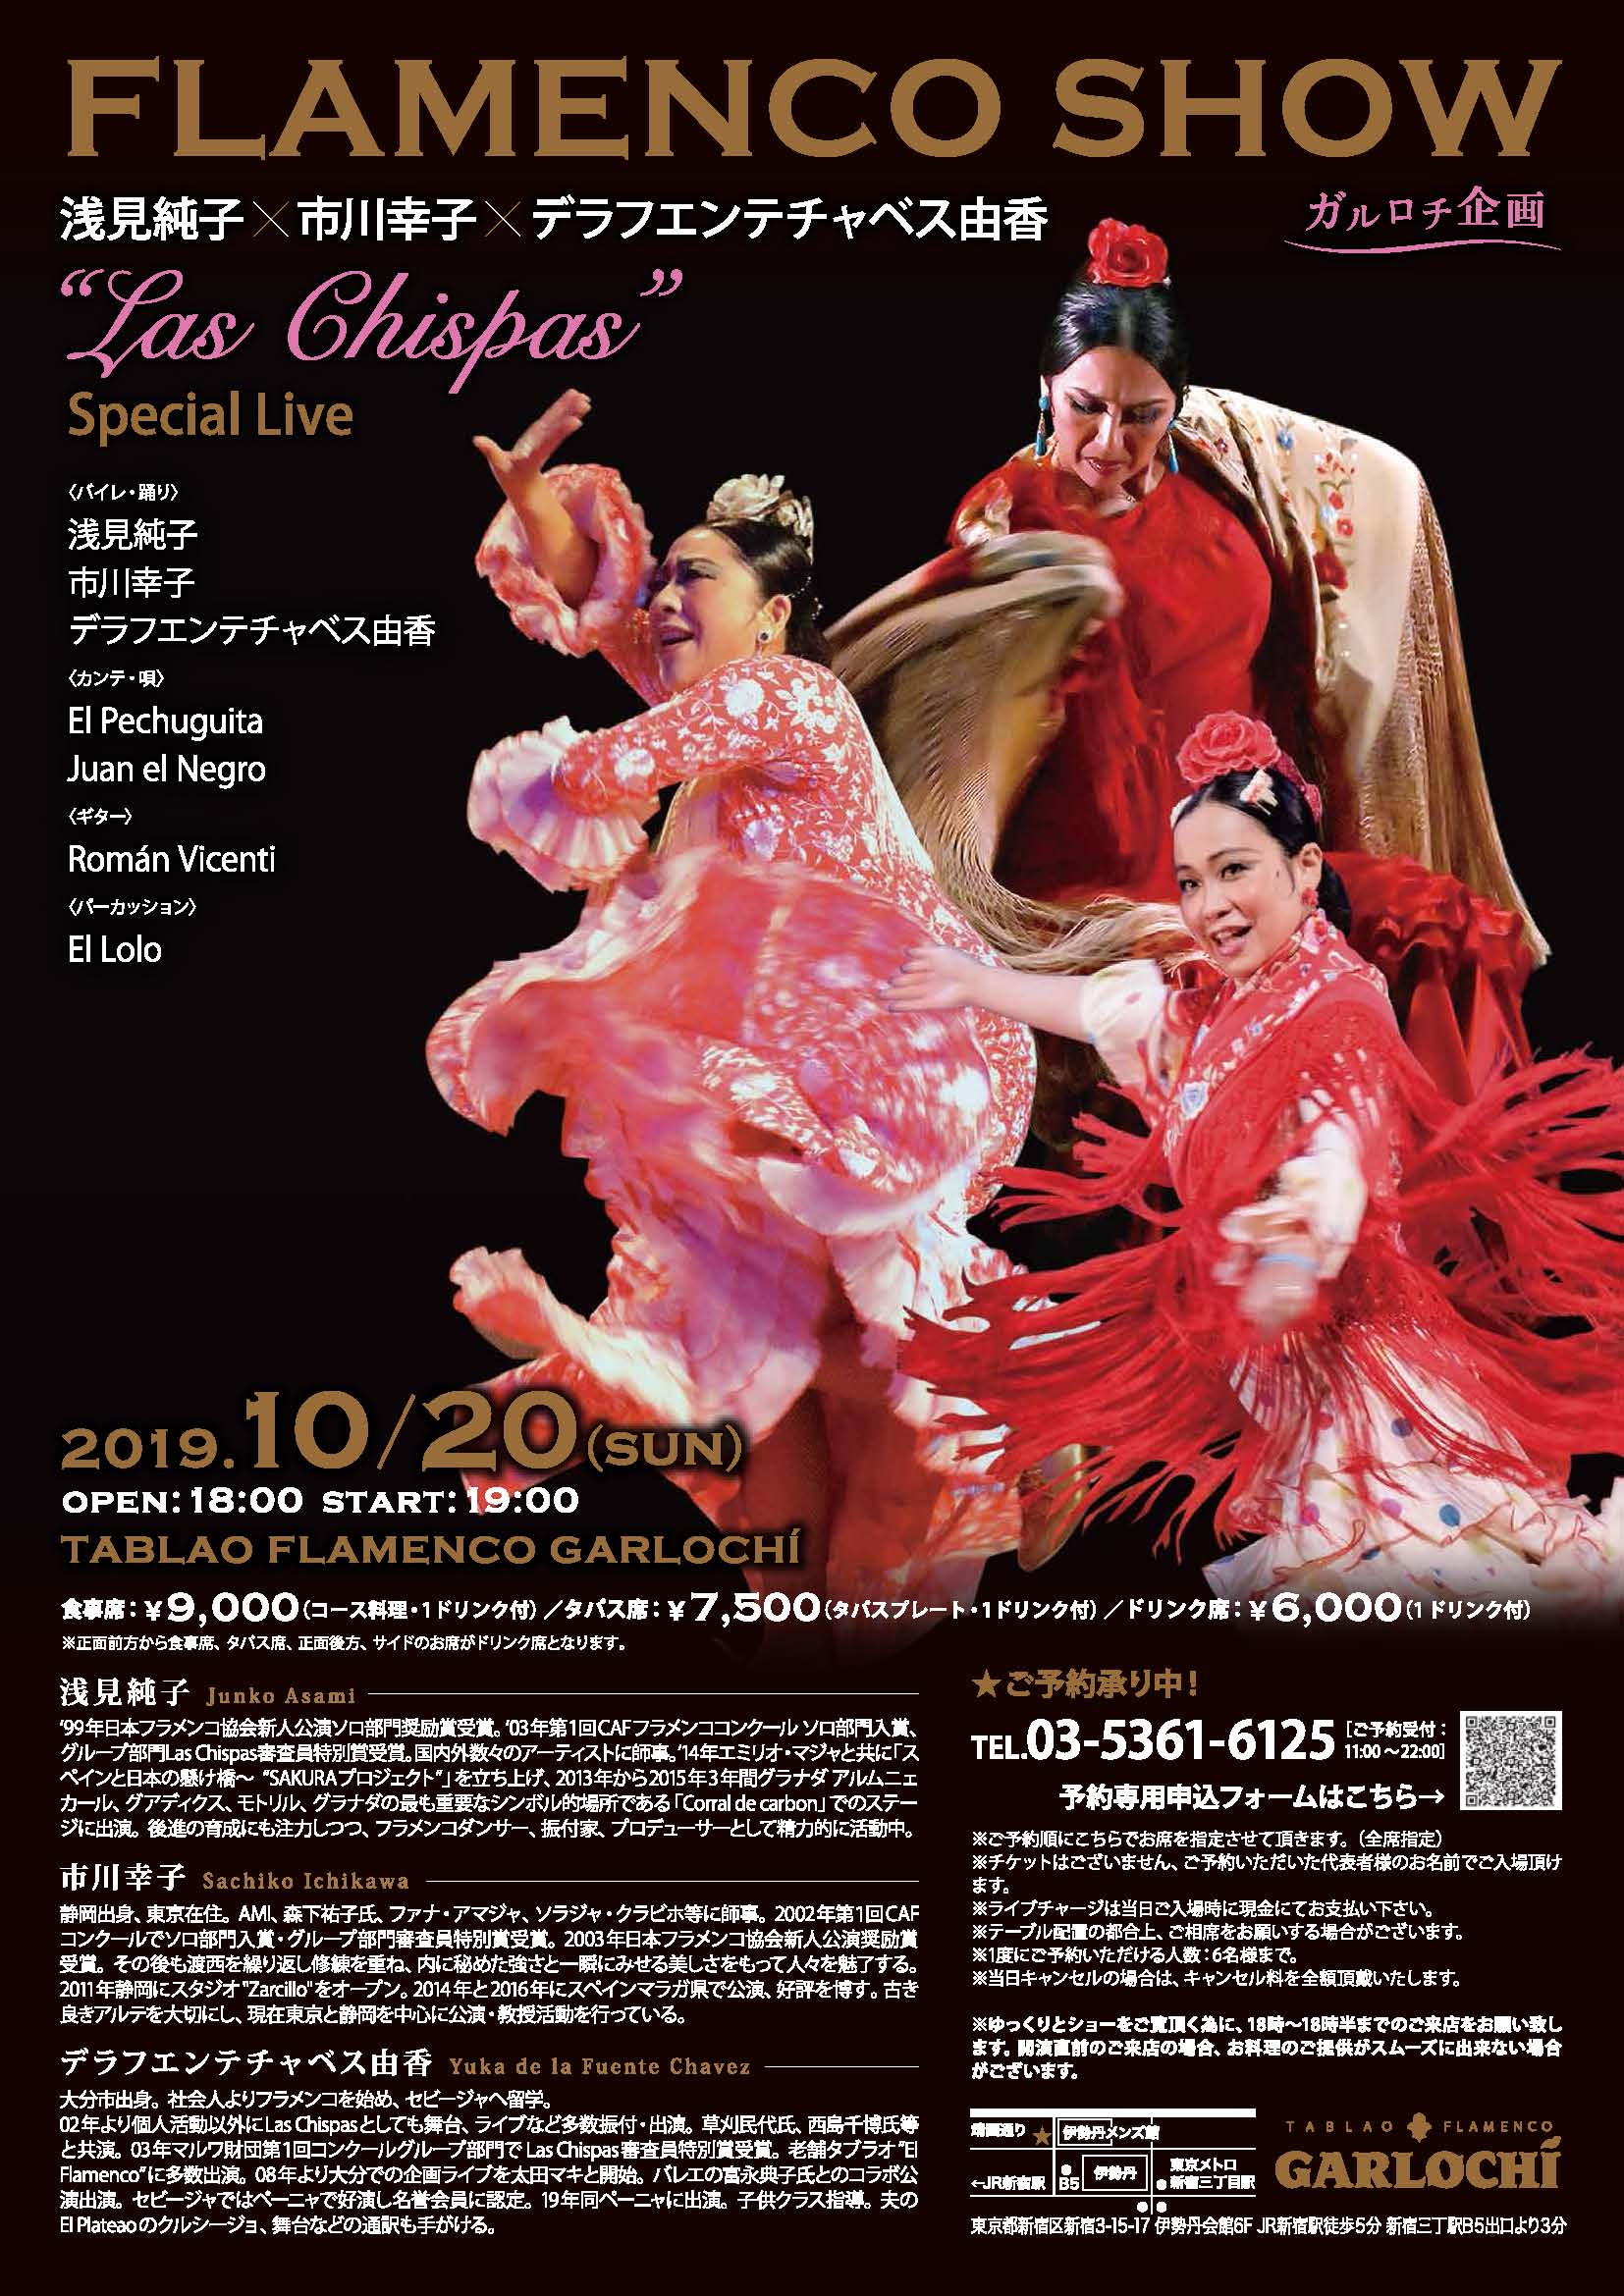 Flamenco LIVE 新宿ガルロチ“Las Chispas”Special Live